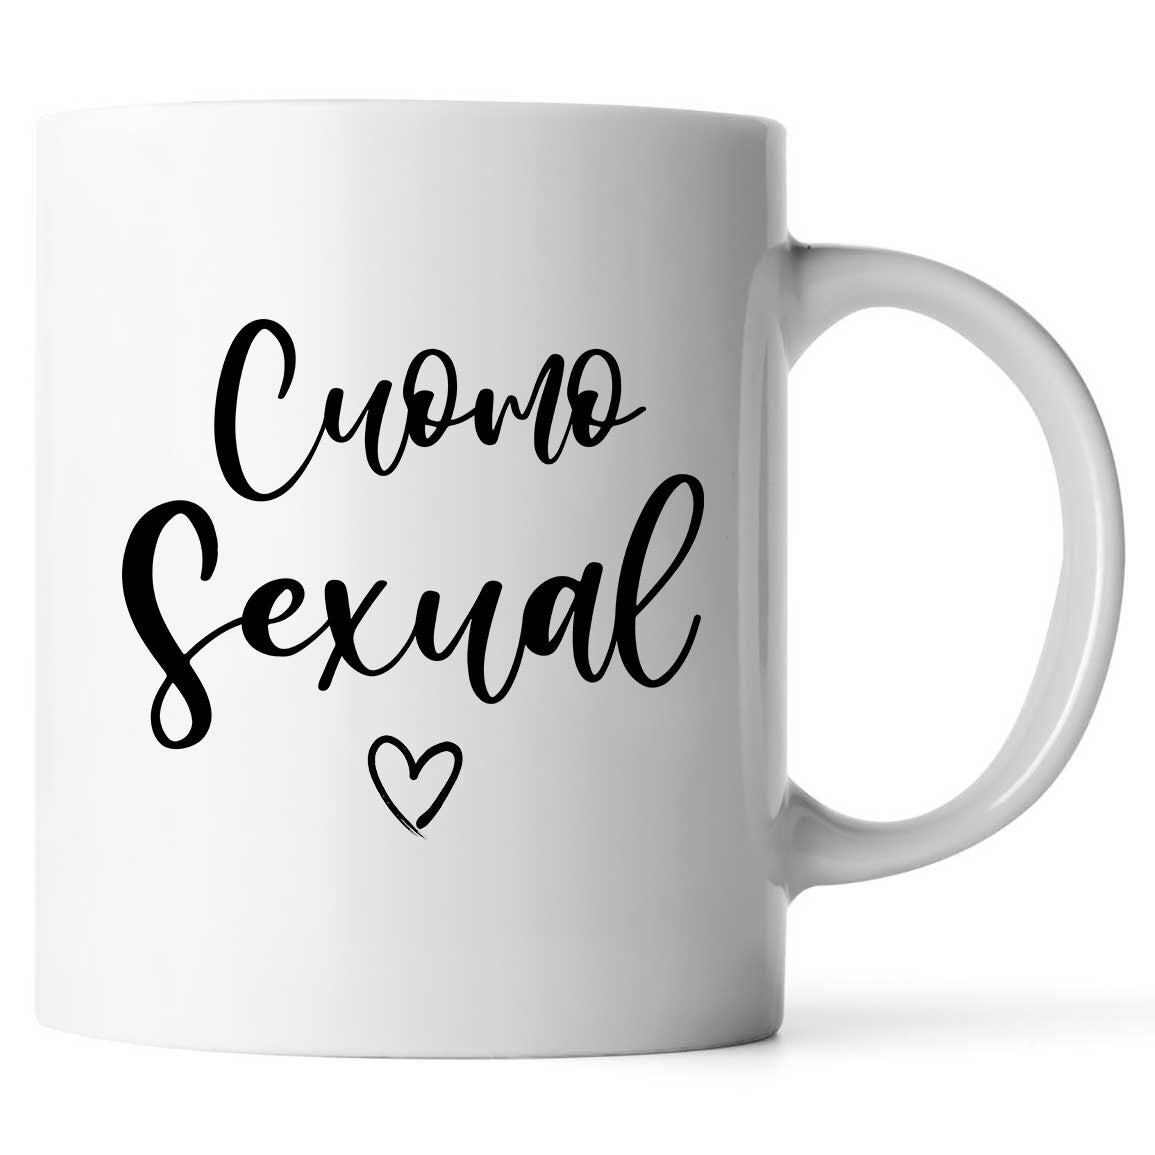  Coffee MugKL281121_Cuomo Sexual Cuomosexual A-N-Drew Cuomo Chris Cuomo Cuomo Brothers Governor Cuomo Cuomo For President Quarantine Changing